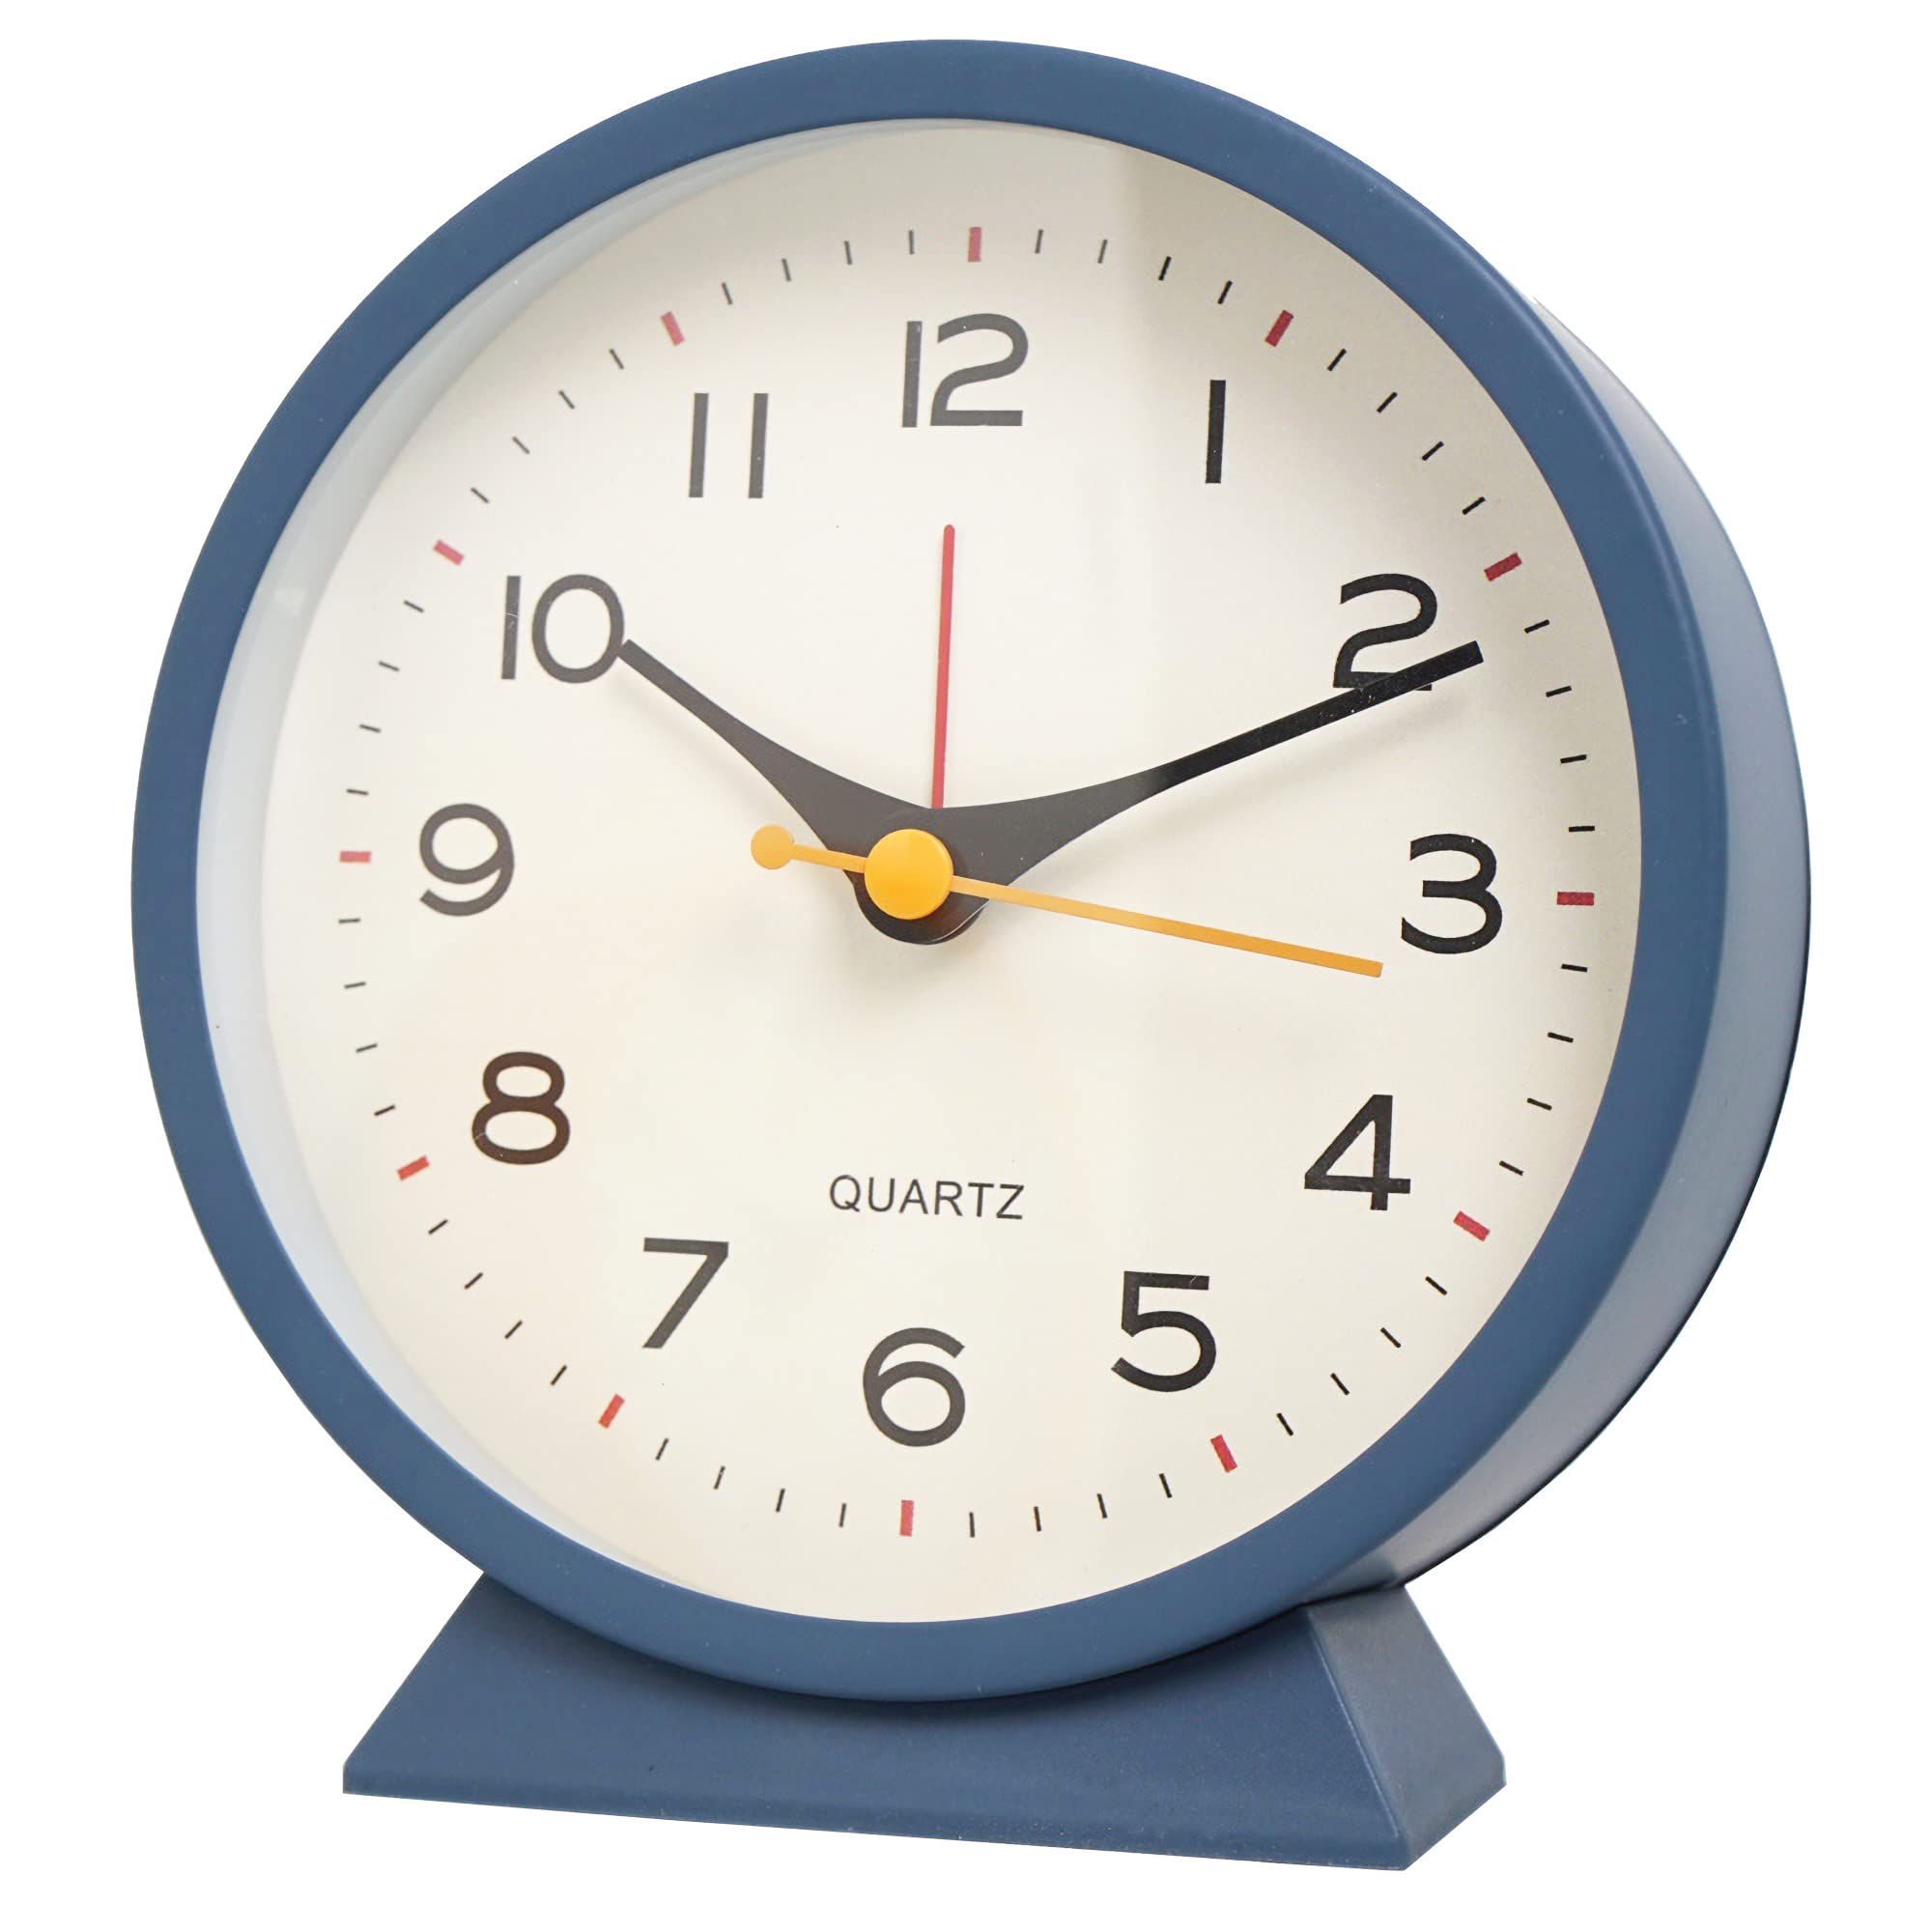 SHISEDECO Retro Analog Alarm Clock